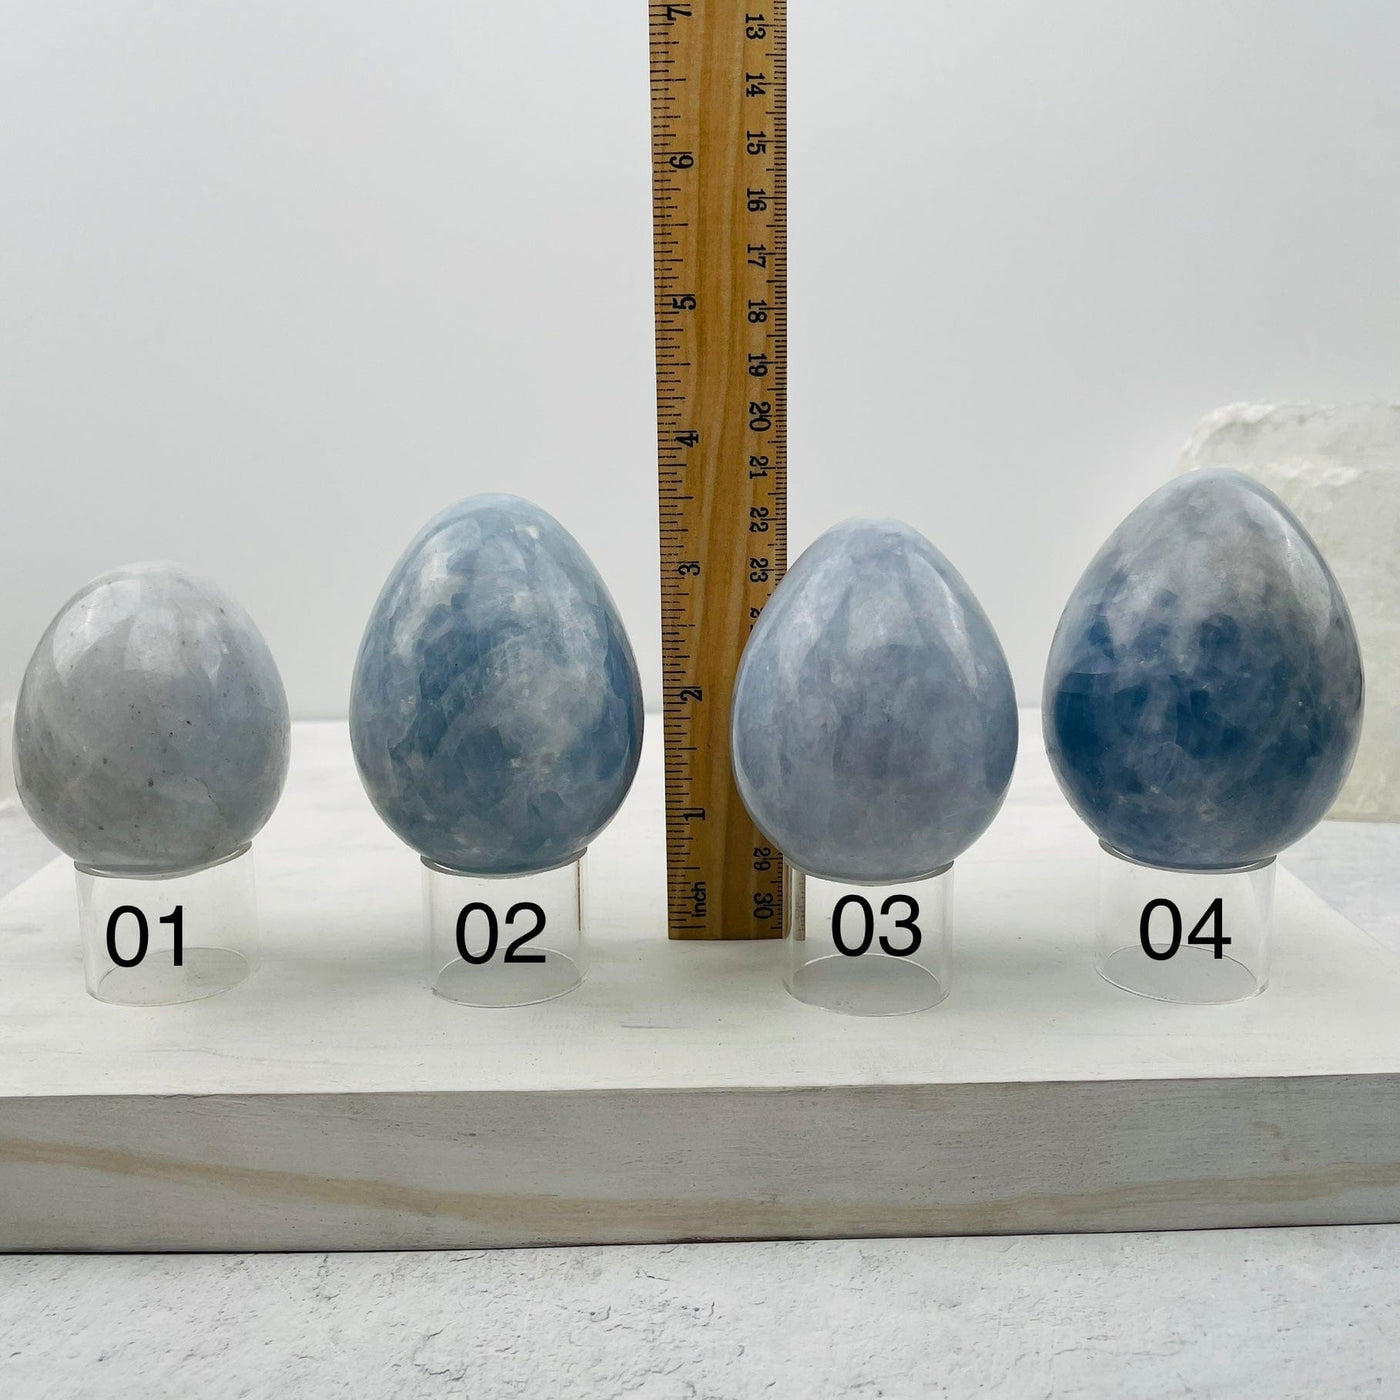 blue calcite eggs are you choose 